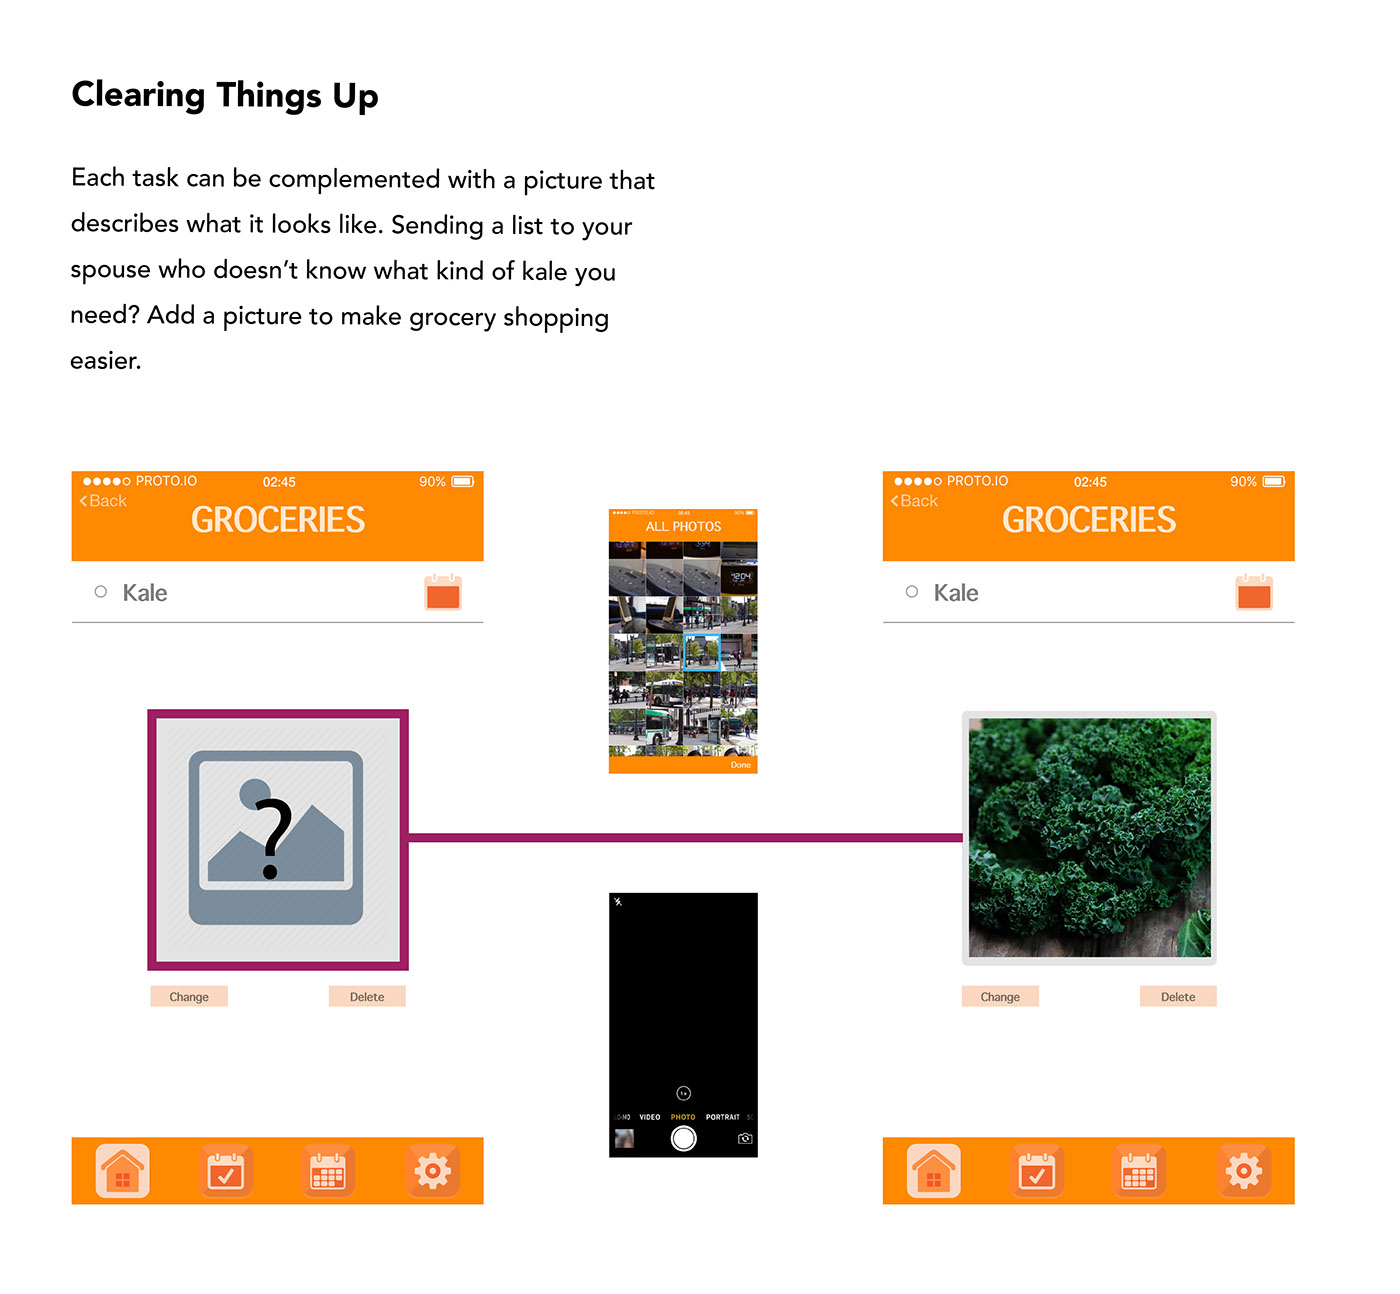 user business busy share app to do calendar homemaker house errands